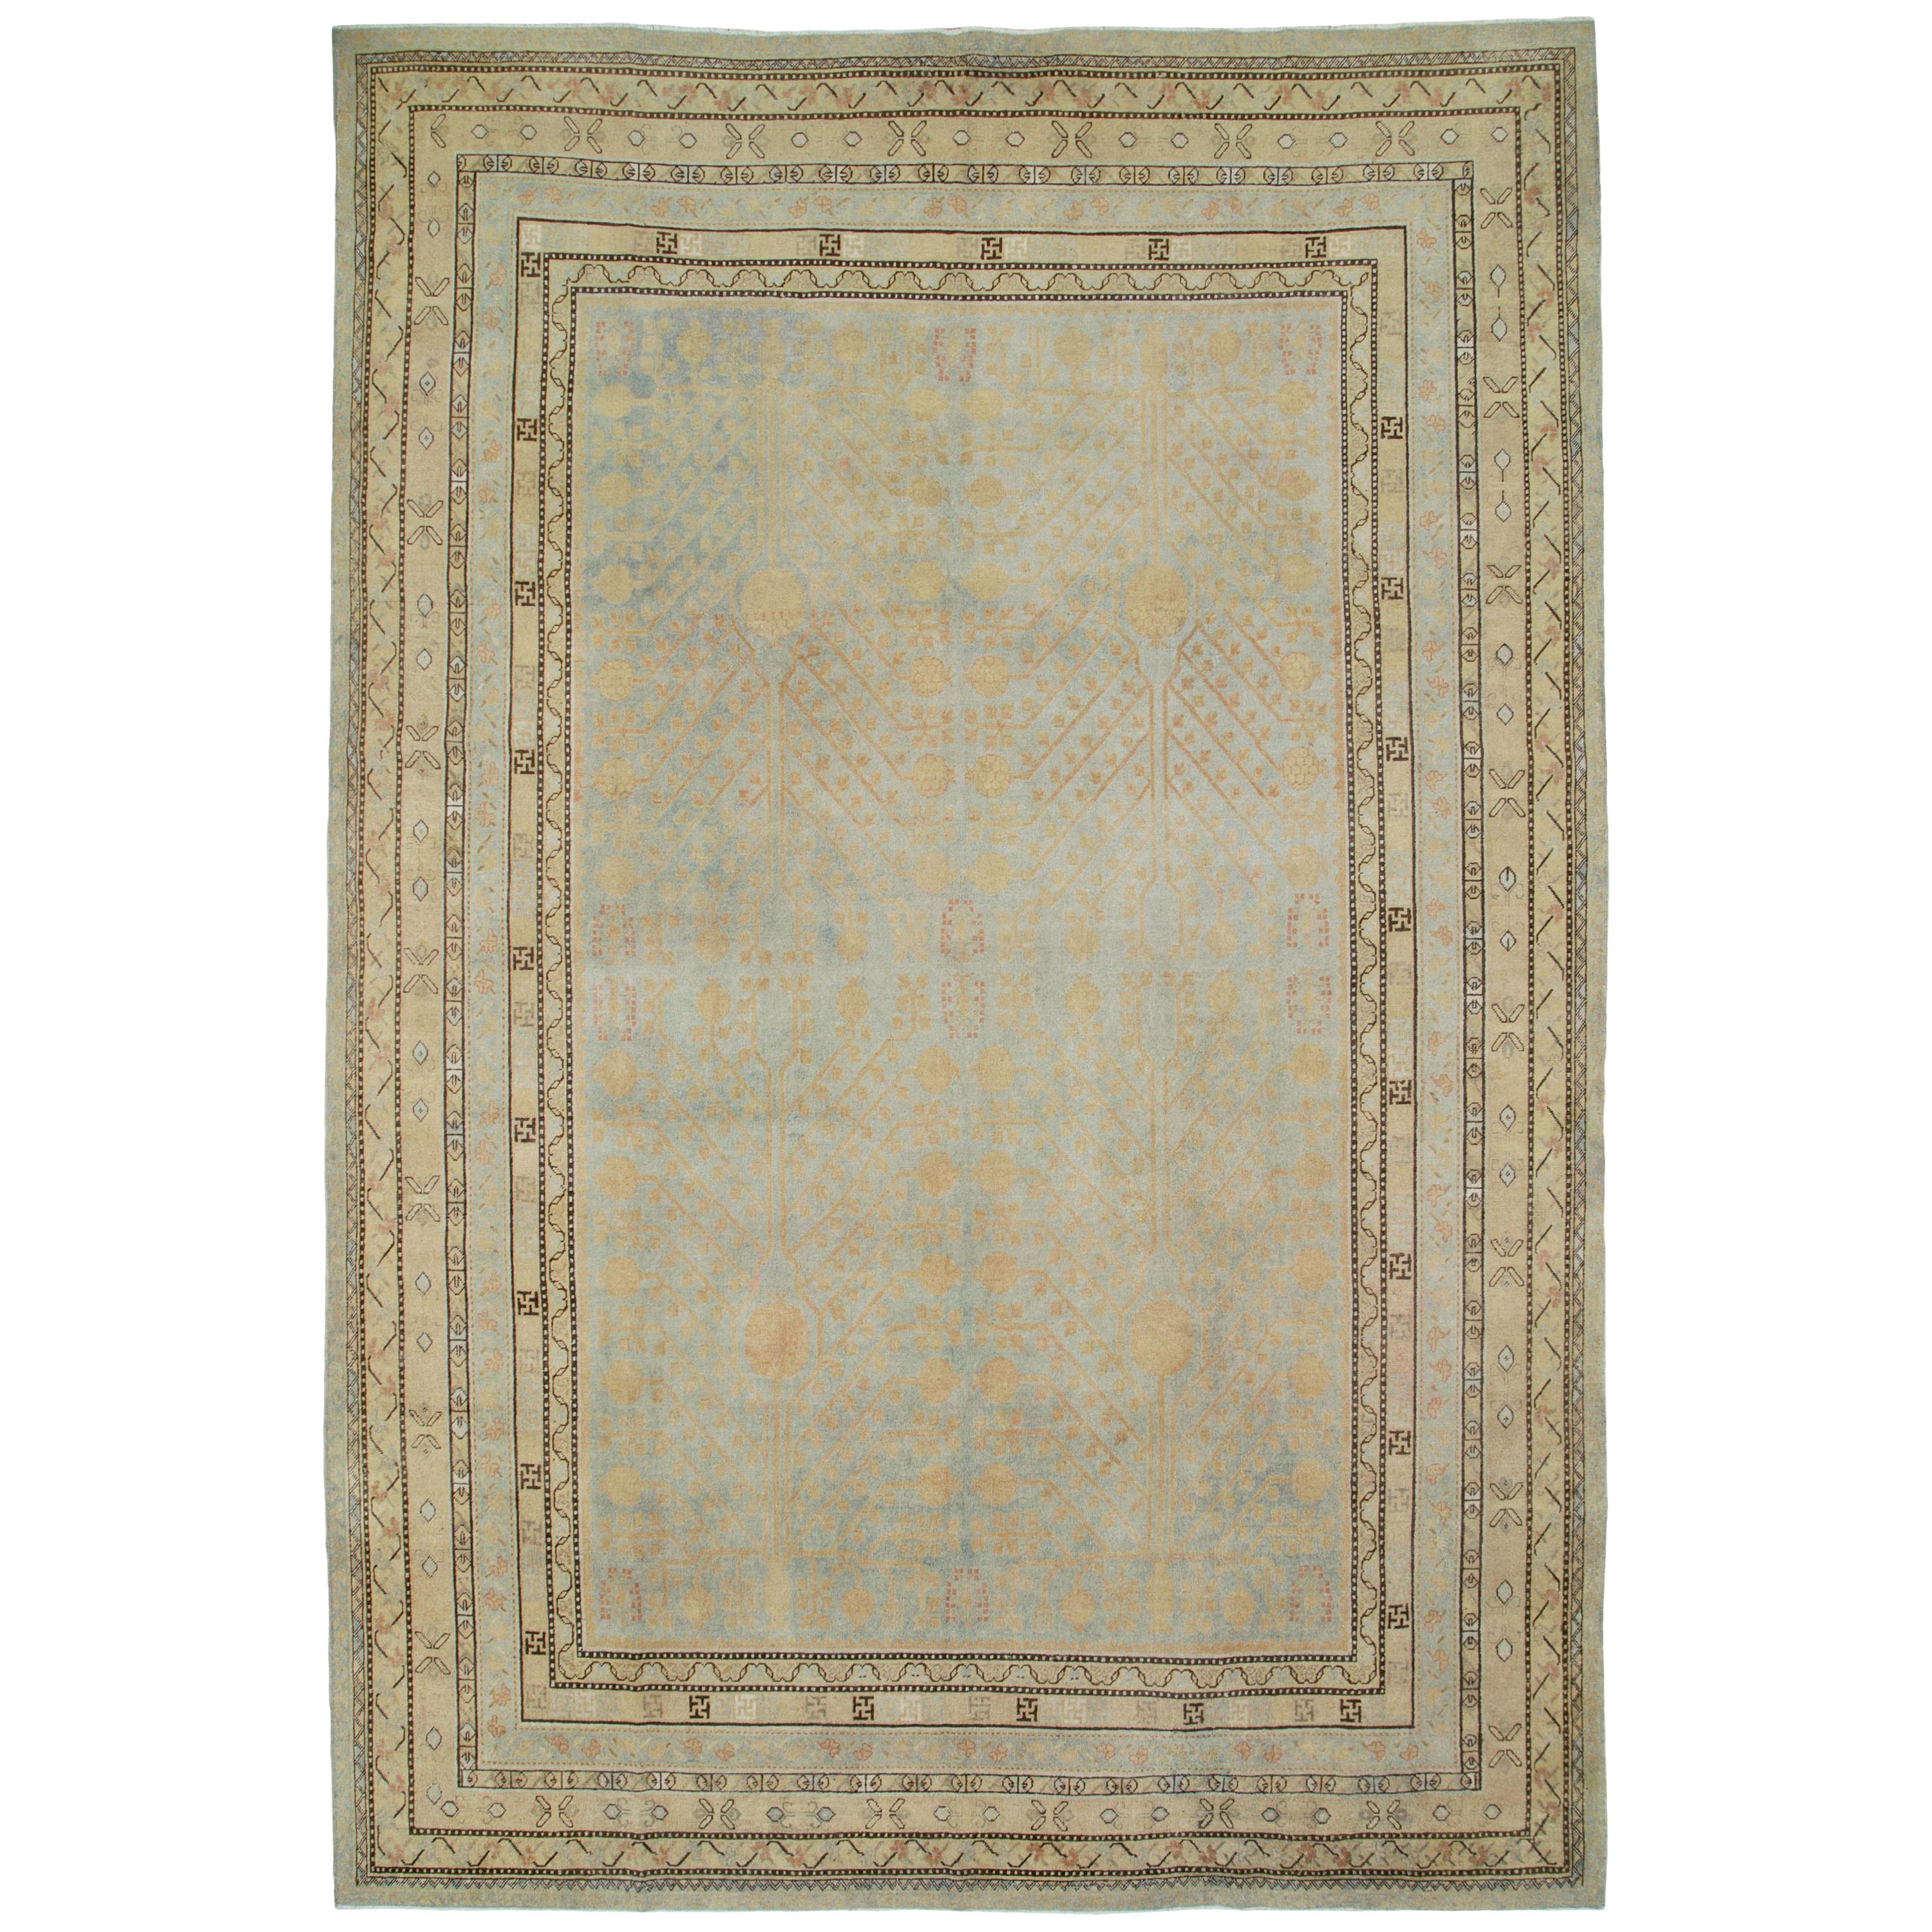 Antique East Turkestan Khotan Carpet